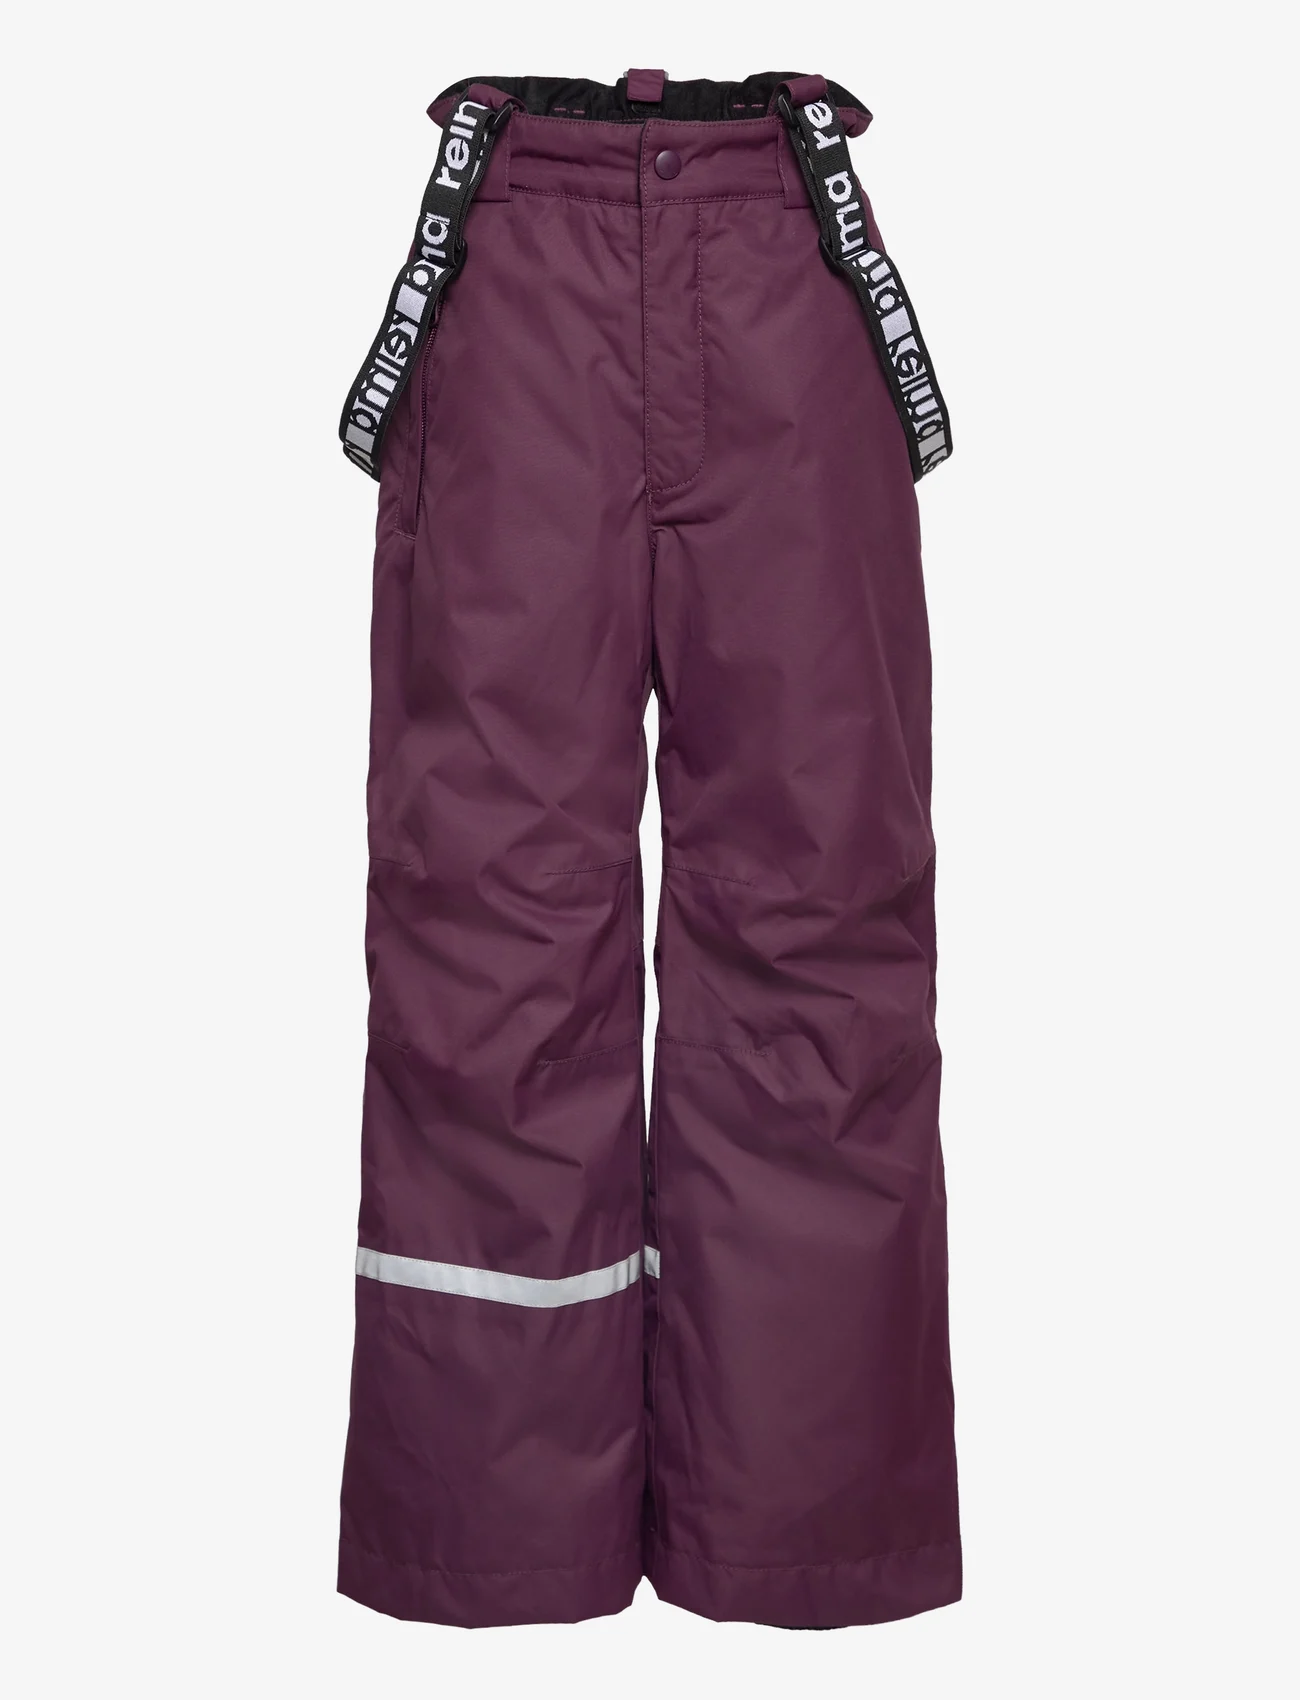 Reima - Winter pants, Tuokio - fritidsbukser - deep purple - 0